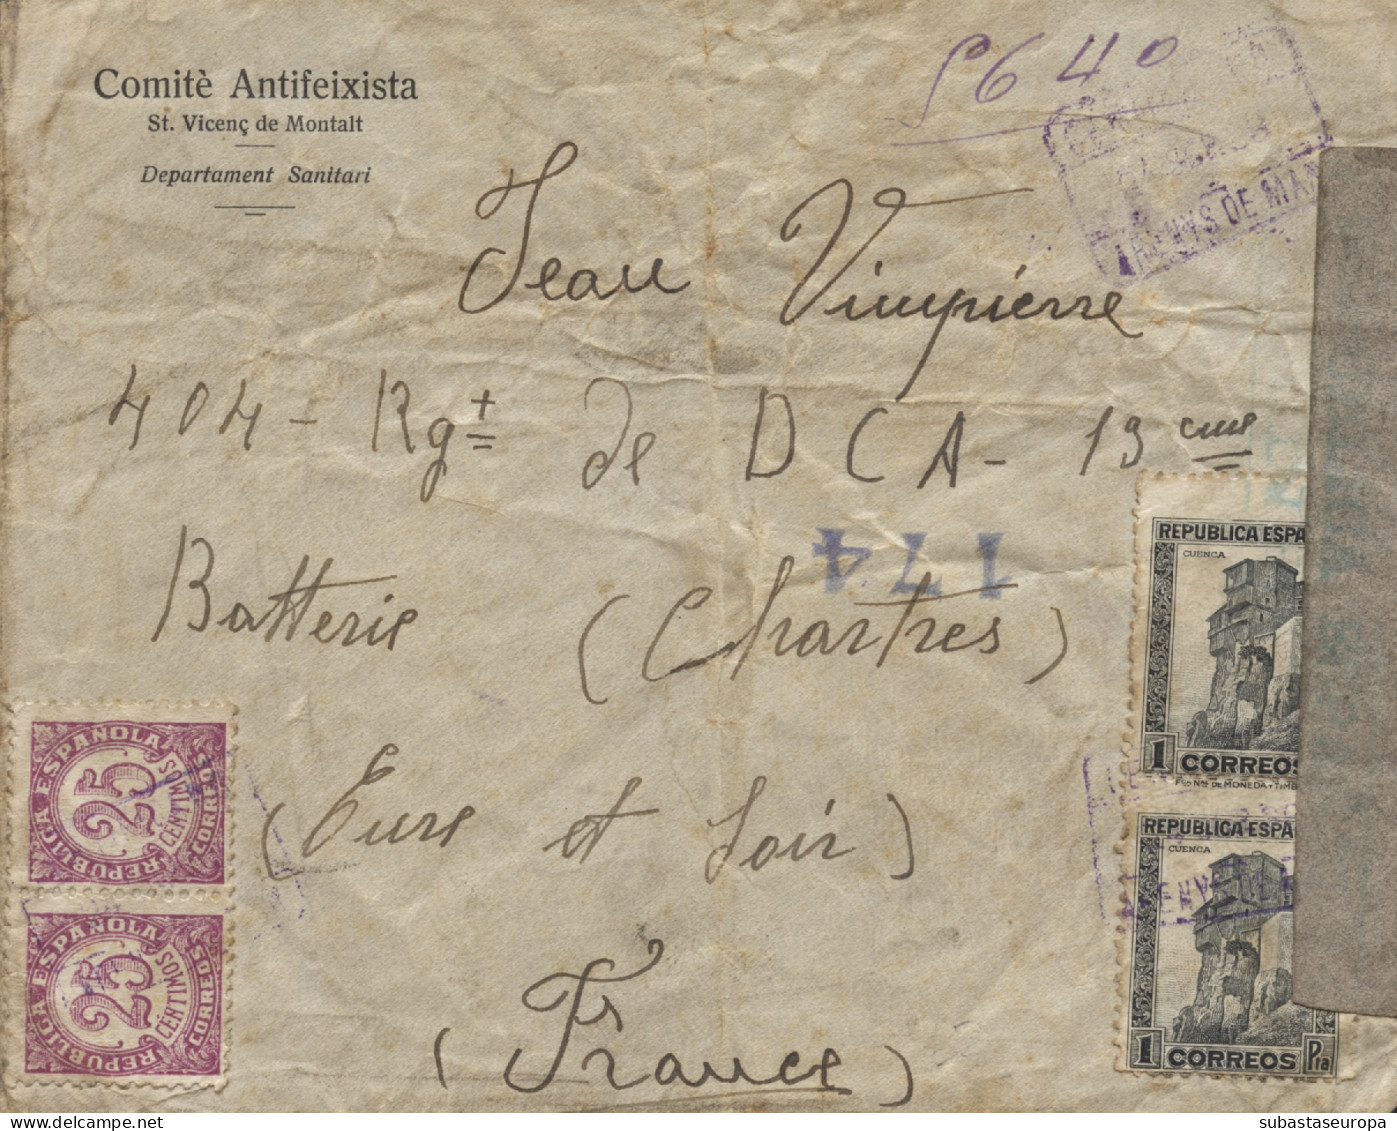 Carta Certificada Circulada De Sant Vicenç De Montalt A Francia, El Año 1938. El Sobre Lleva Membrete "Comité Antifeixis - Republikeinse Censuur